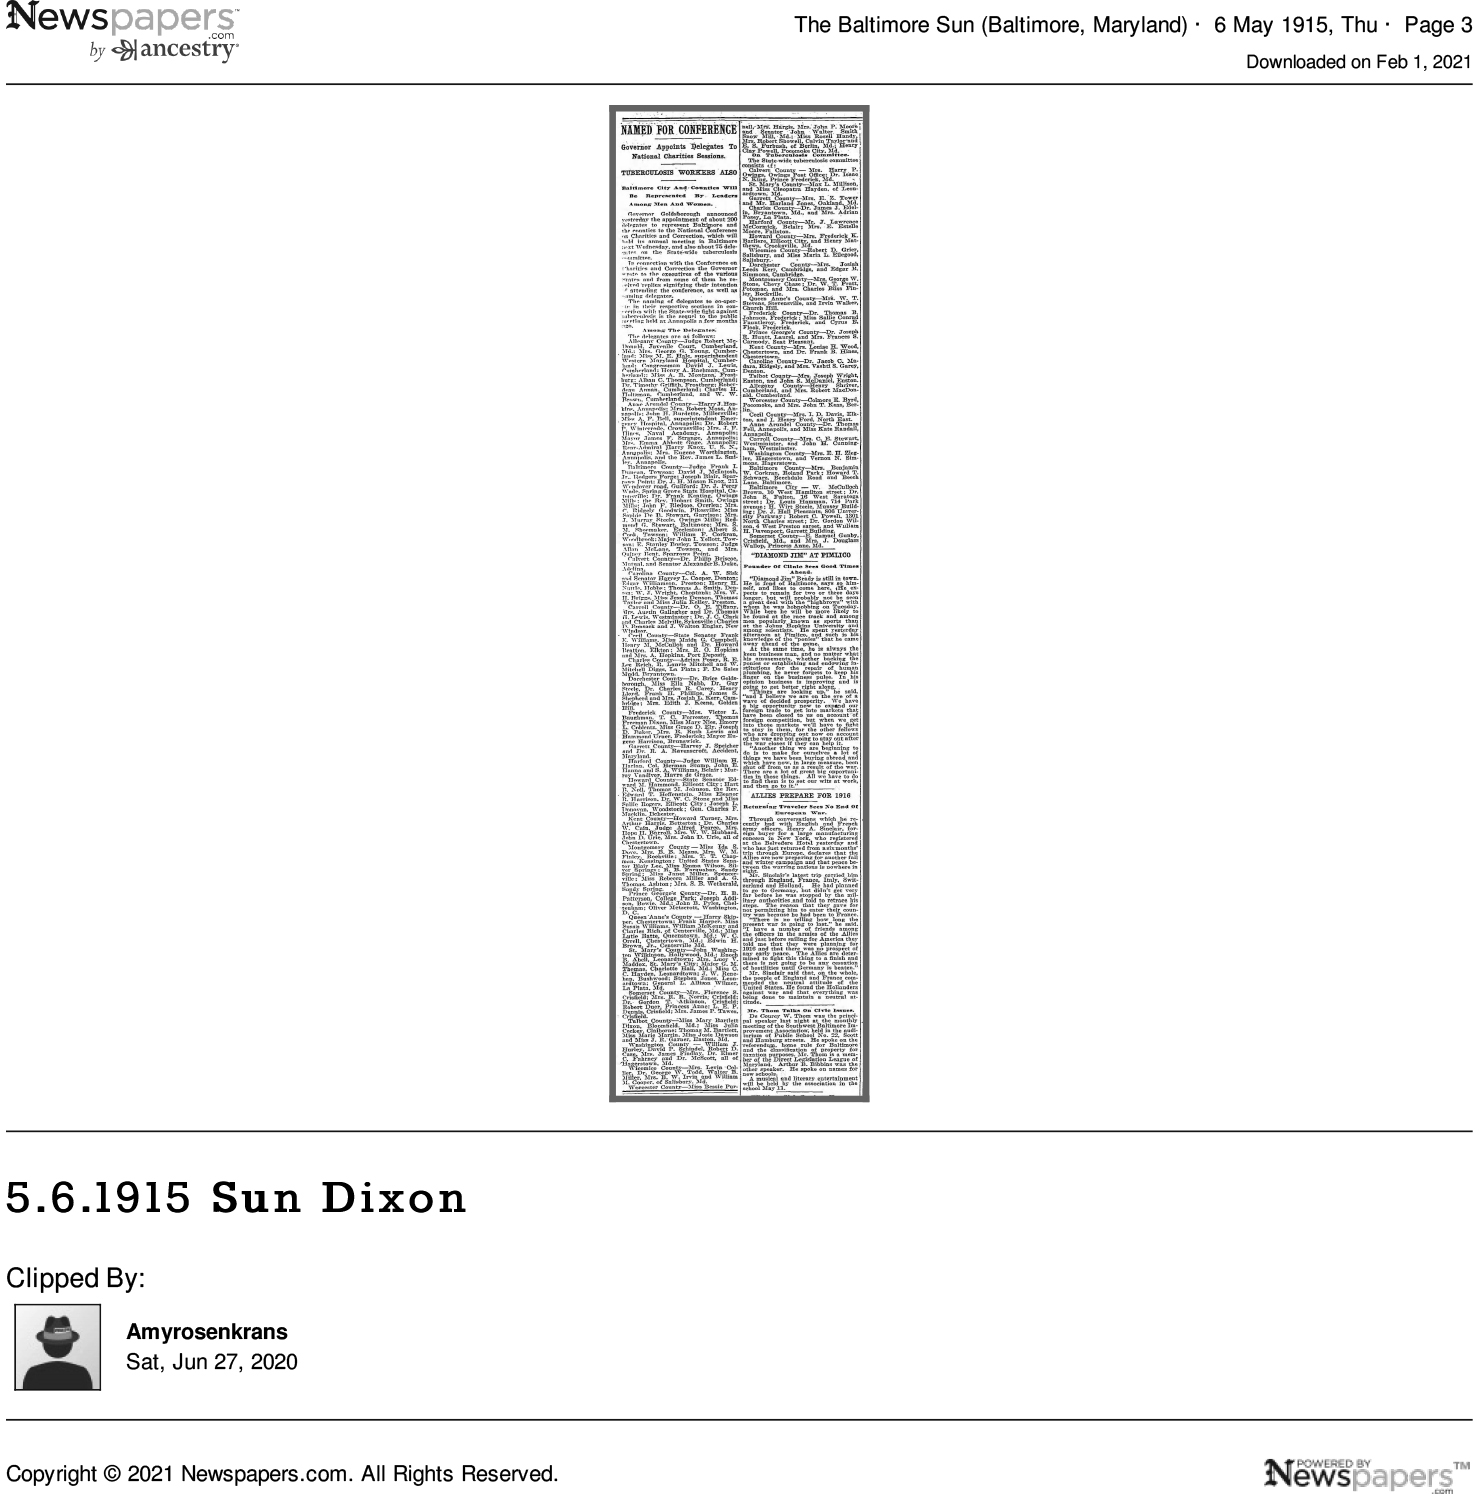 5.6.1915 Sun Dixon - Newspapers.com